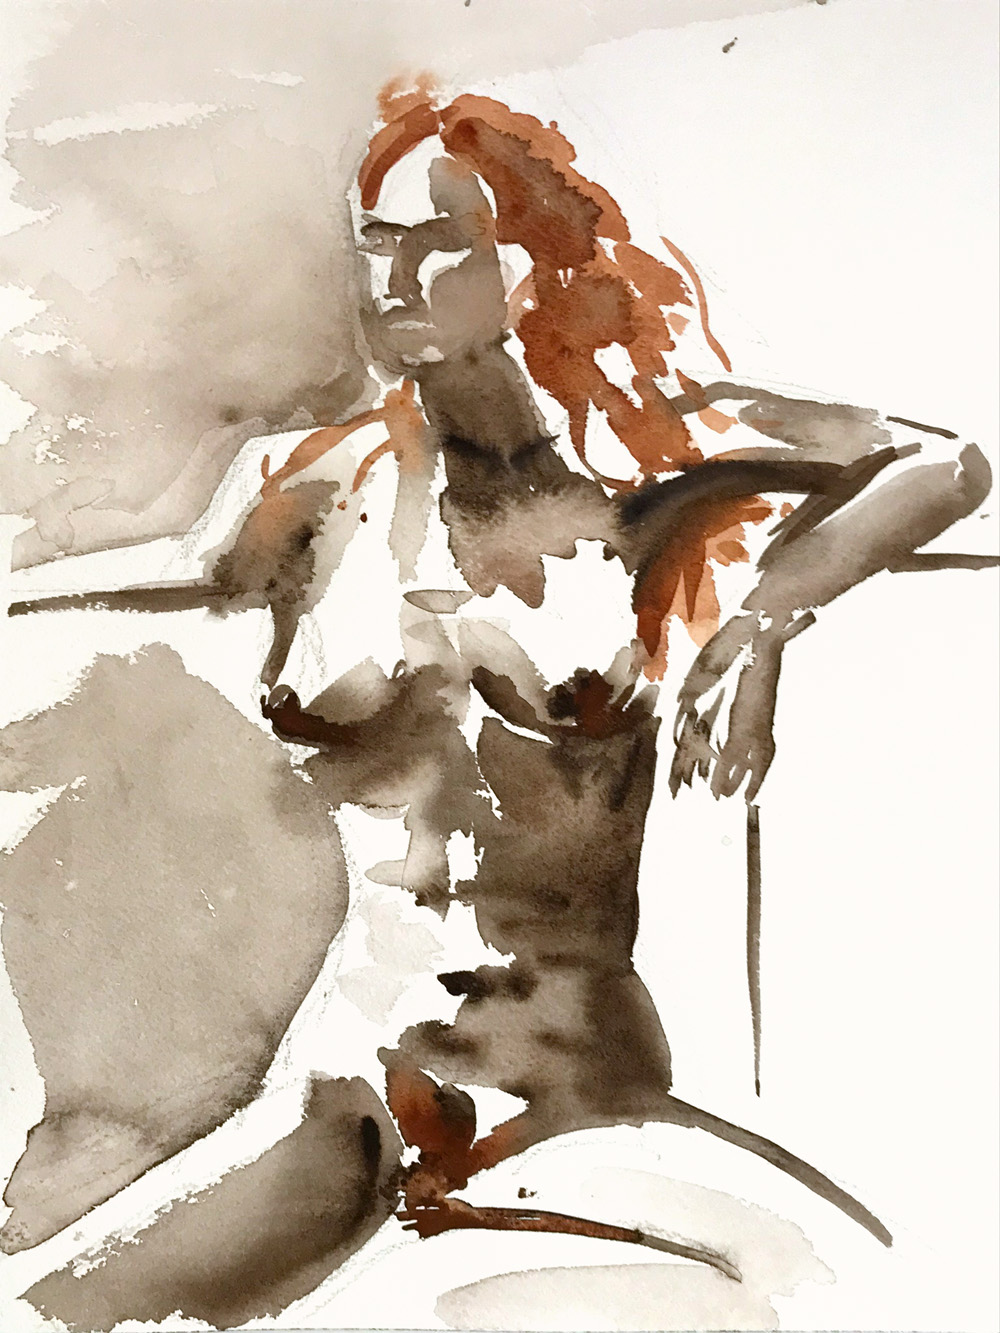 Indira-Cesarine-Anna-2018-Watercolor-on-paper-002.jpg